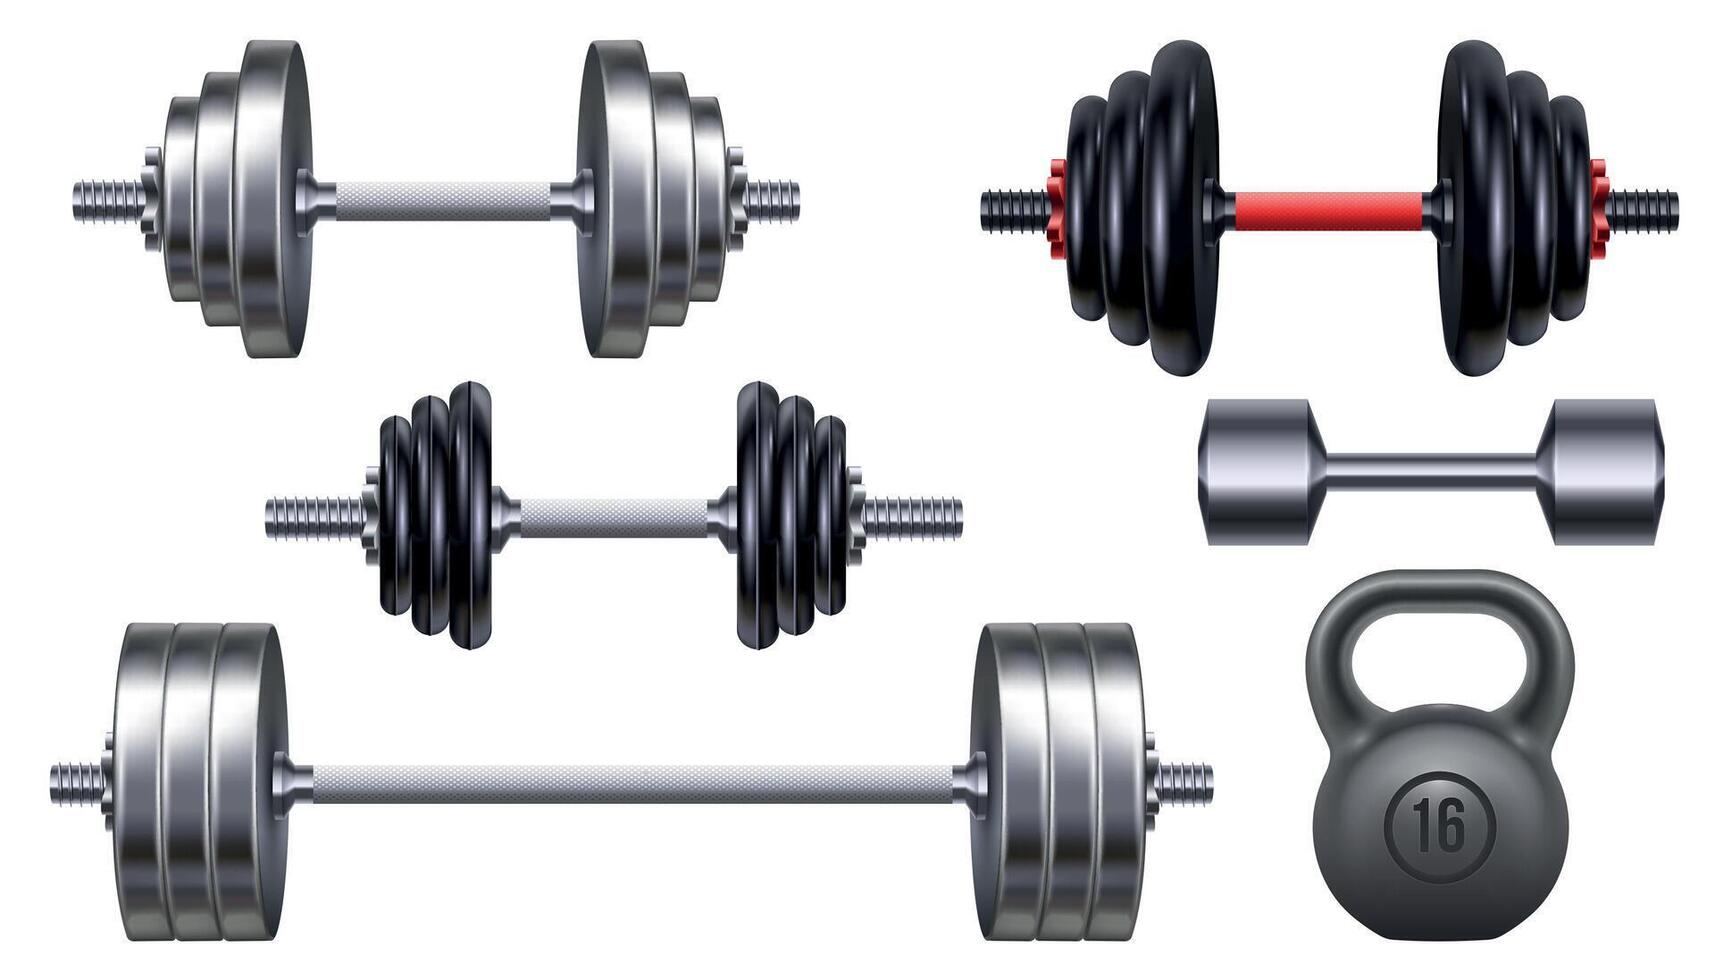 realista metal halteres, kettlebell e barra para Academia peso treinamento. 3d ginástica e musculação exercício ferro equipamento vetor conjunto